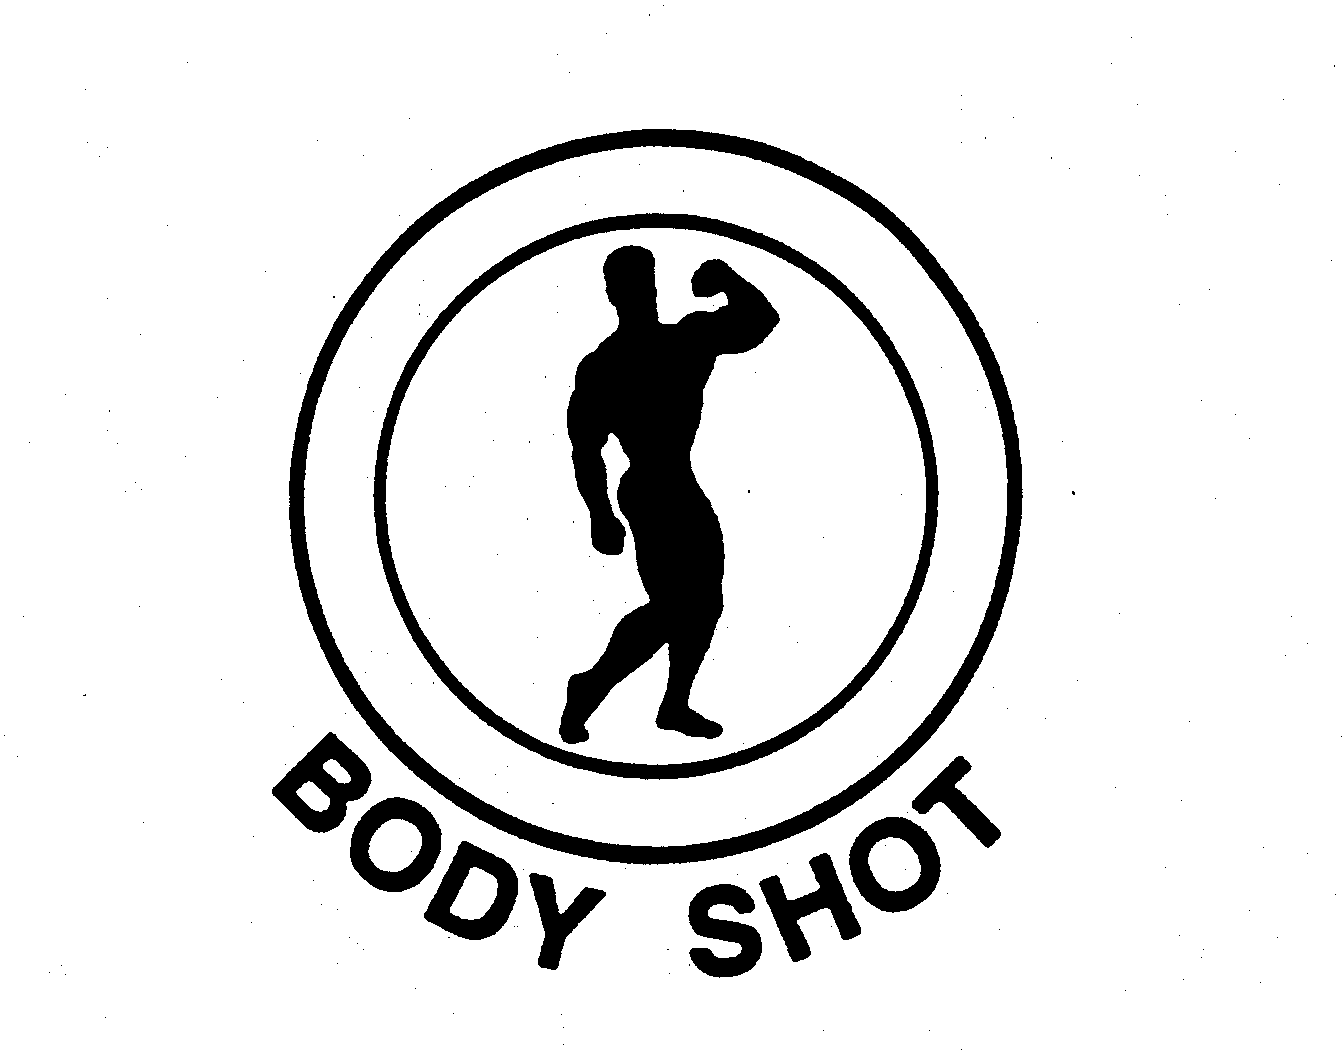 BODY SHOT